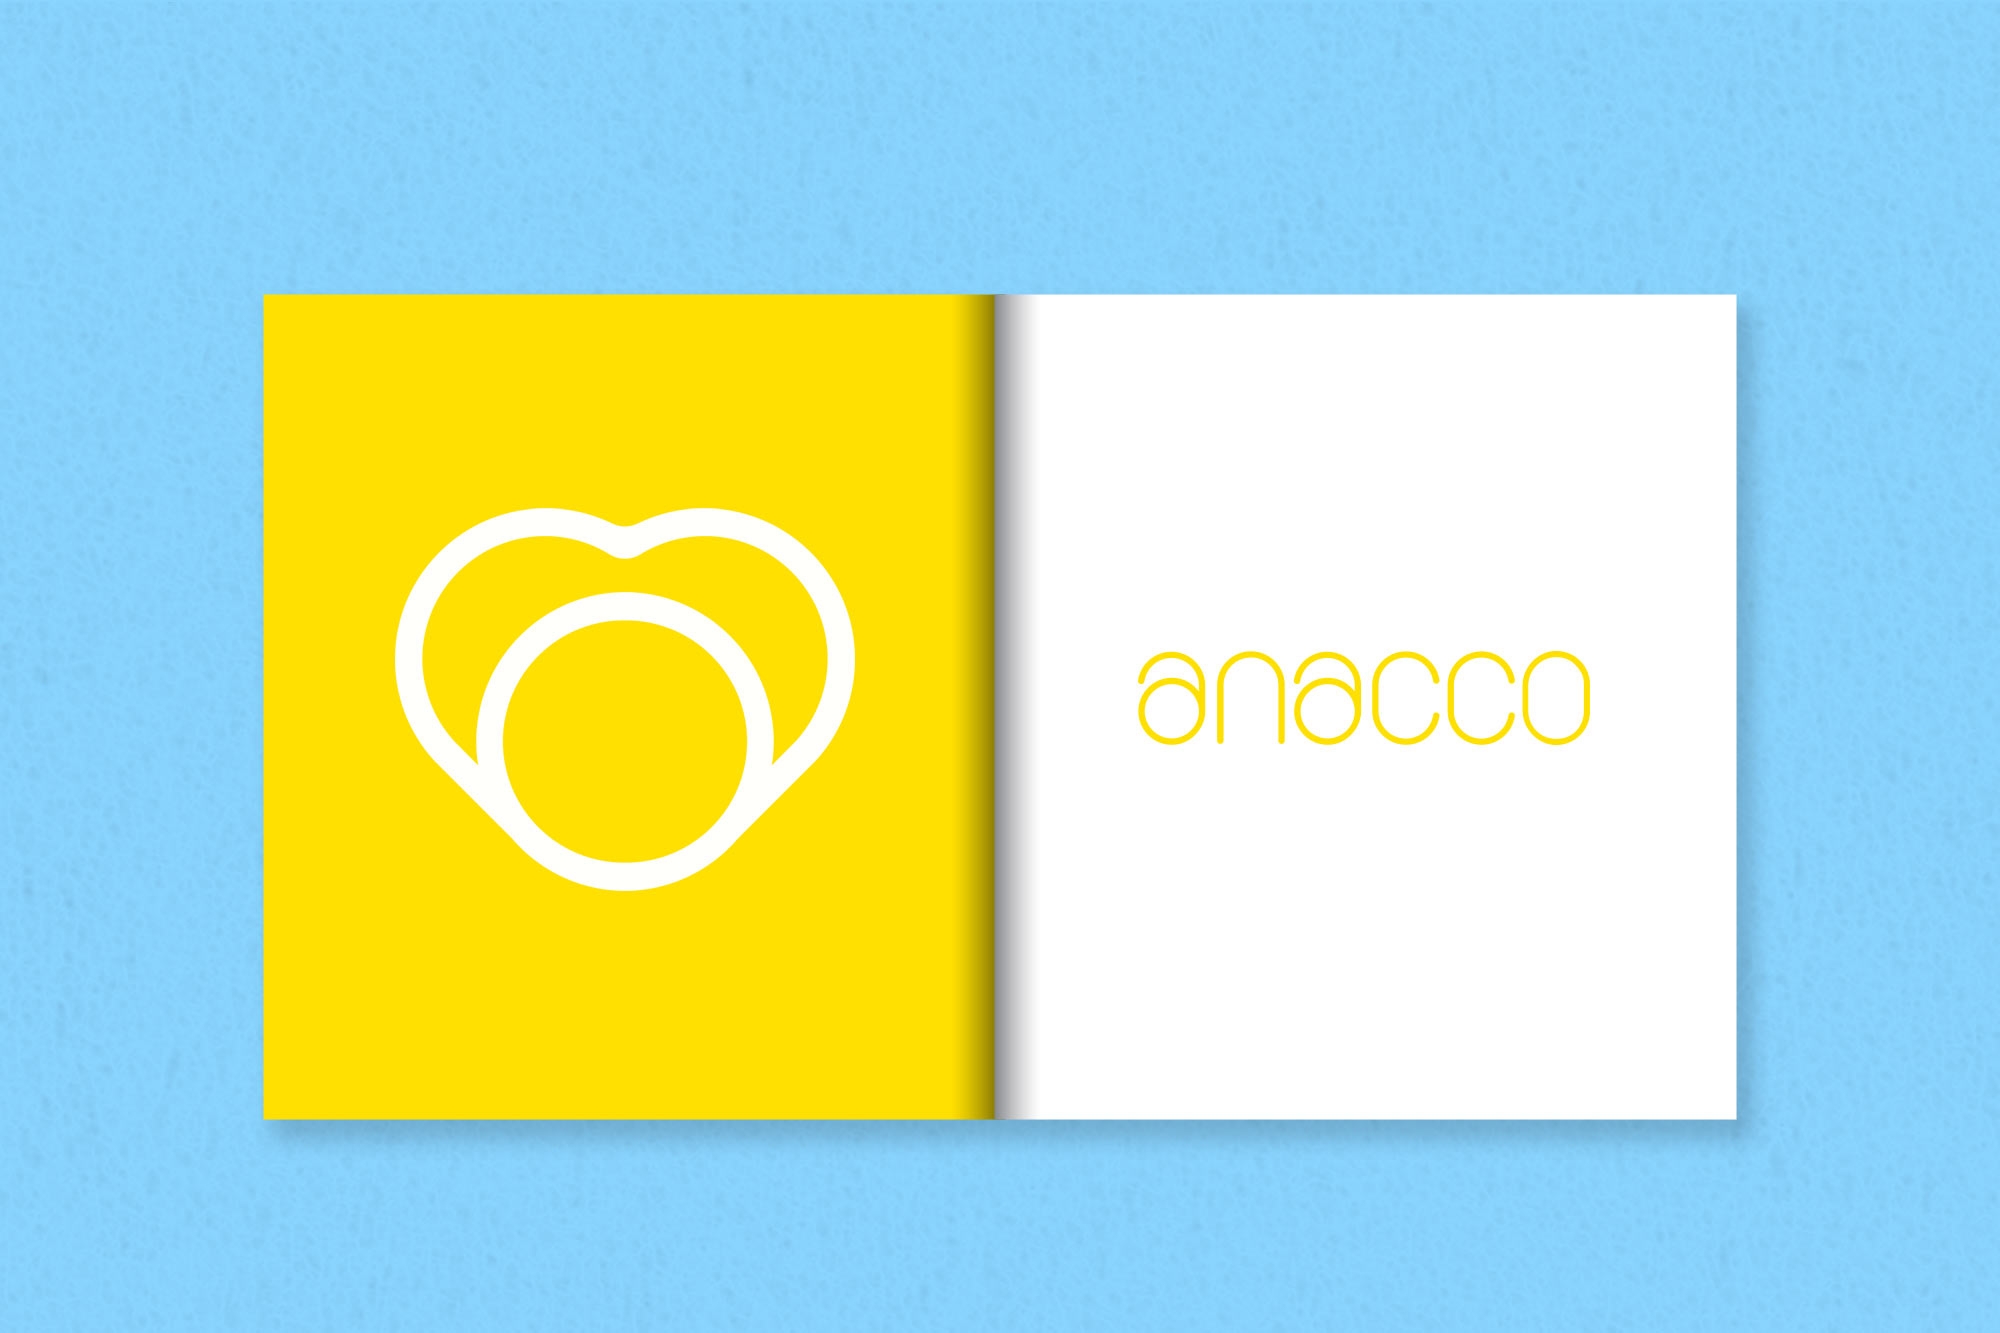 31 books of anacco tribox design